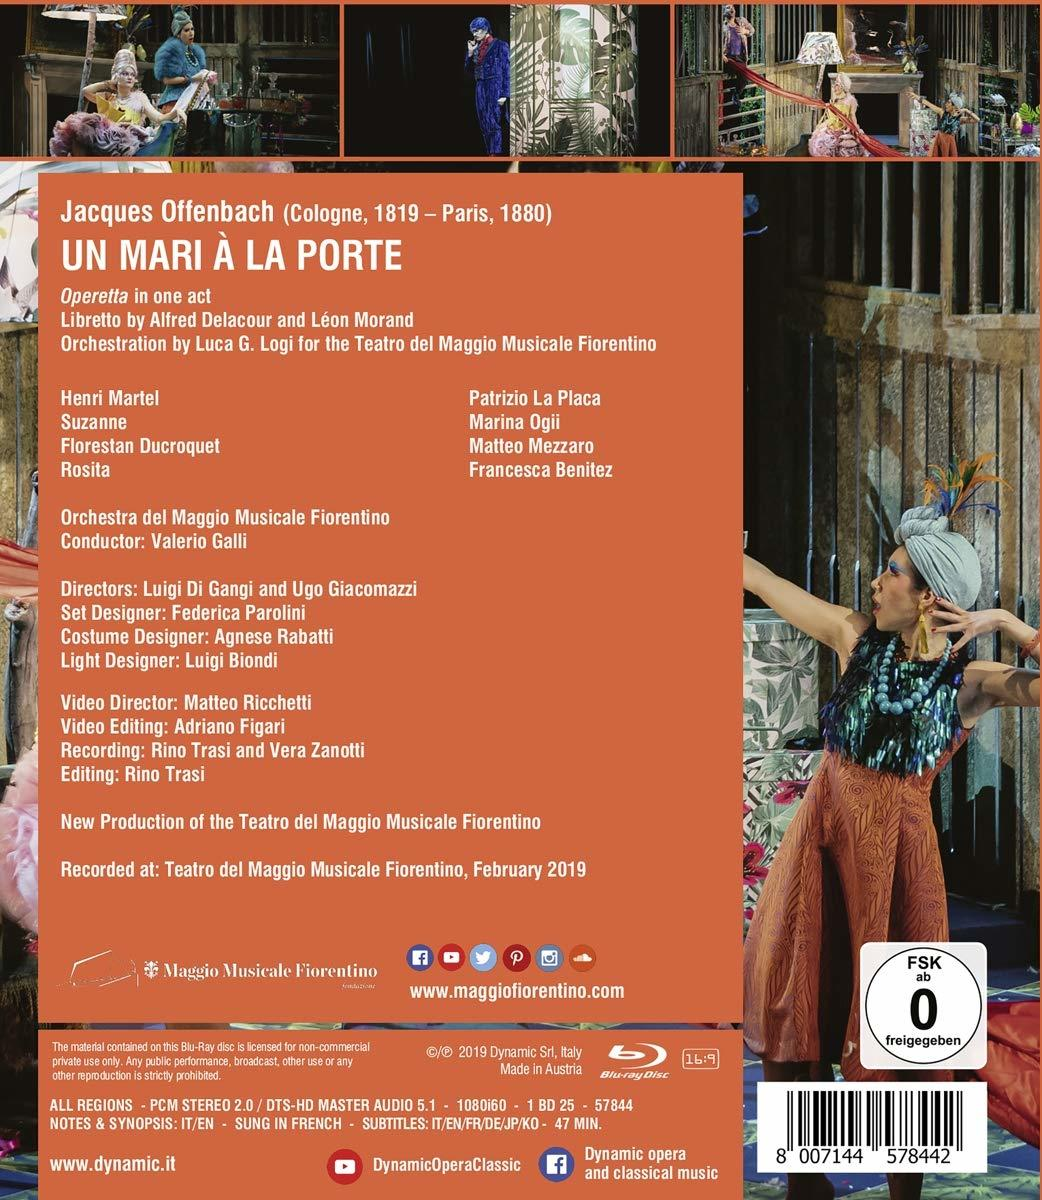 - porte mari - (Blu-ray) La Un la Placa/Ogii/Mezzaro/Benitez/Galli/+ [Blu-ray] a